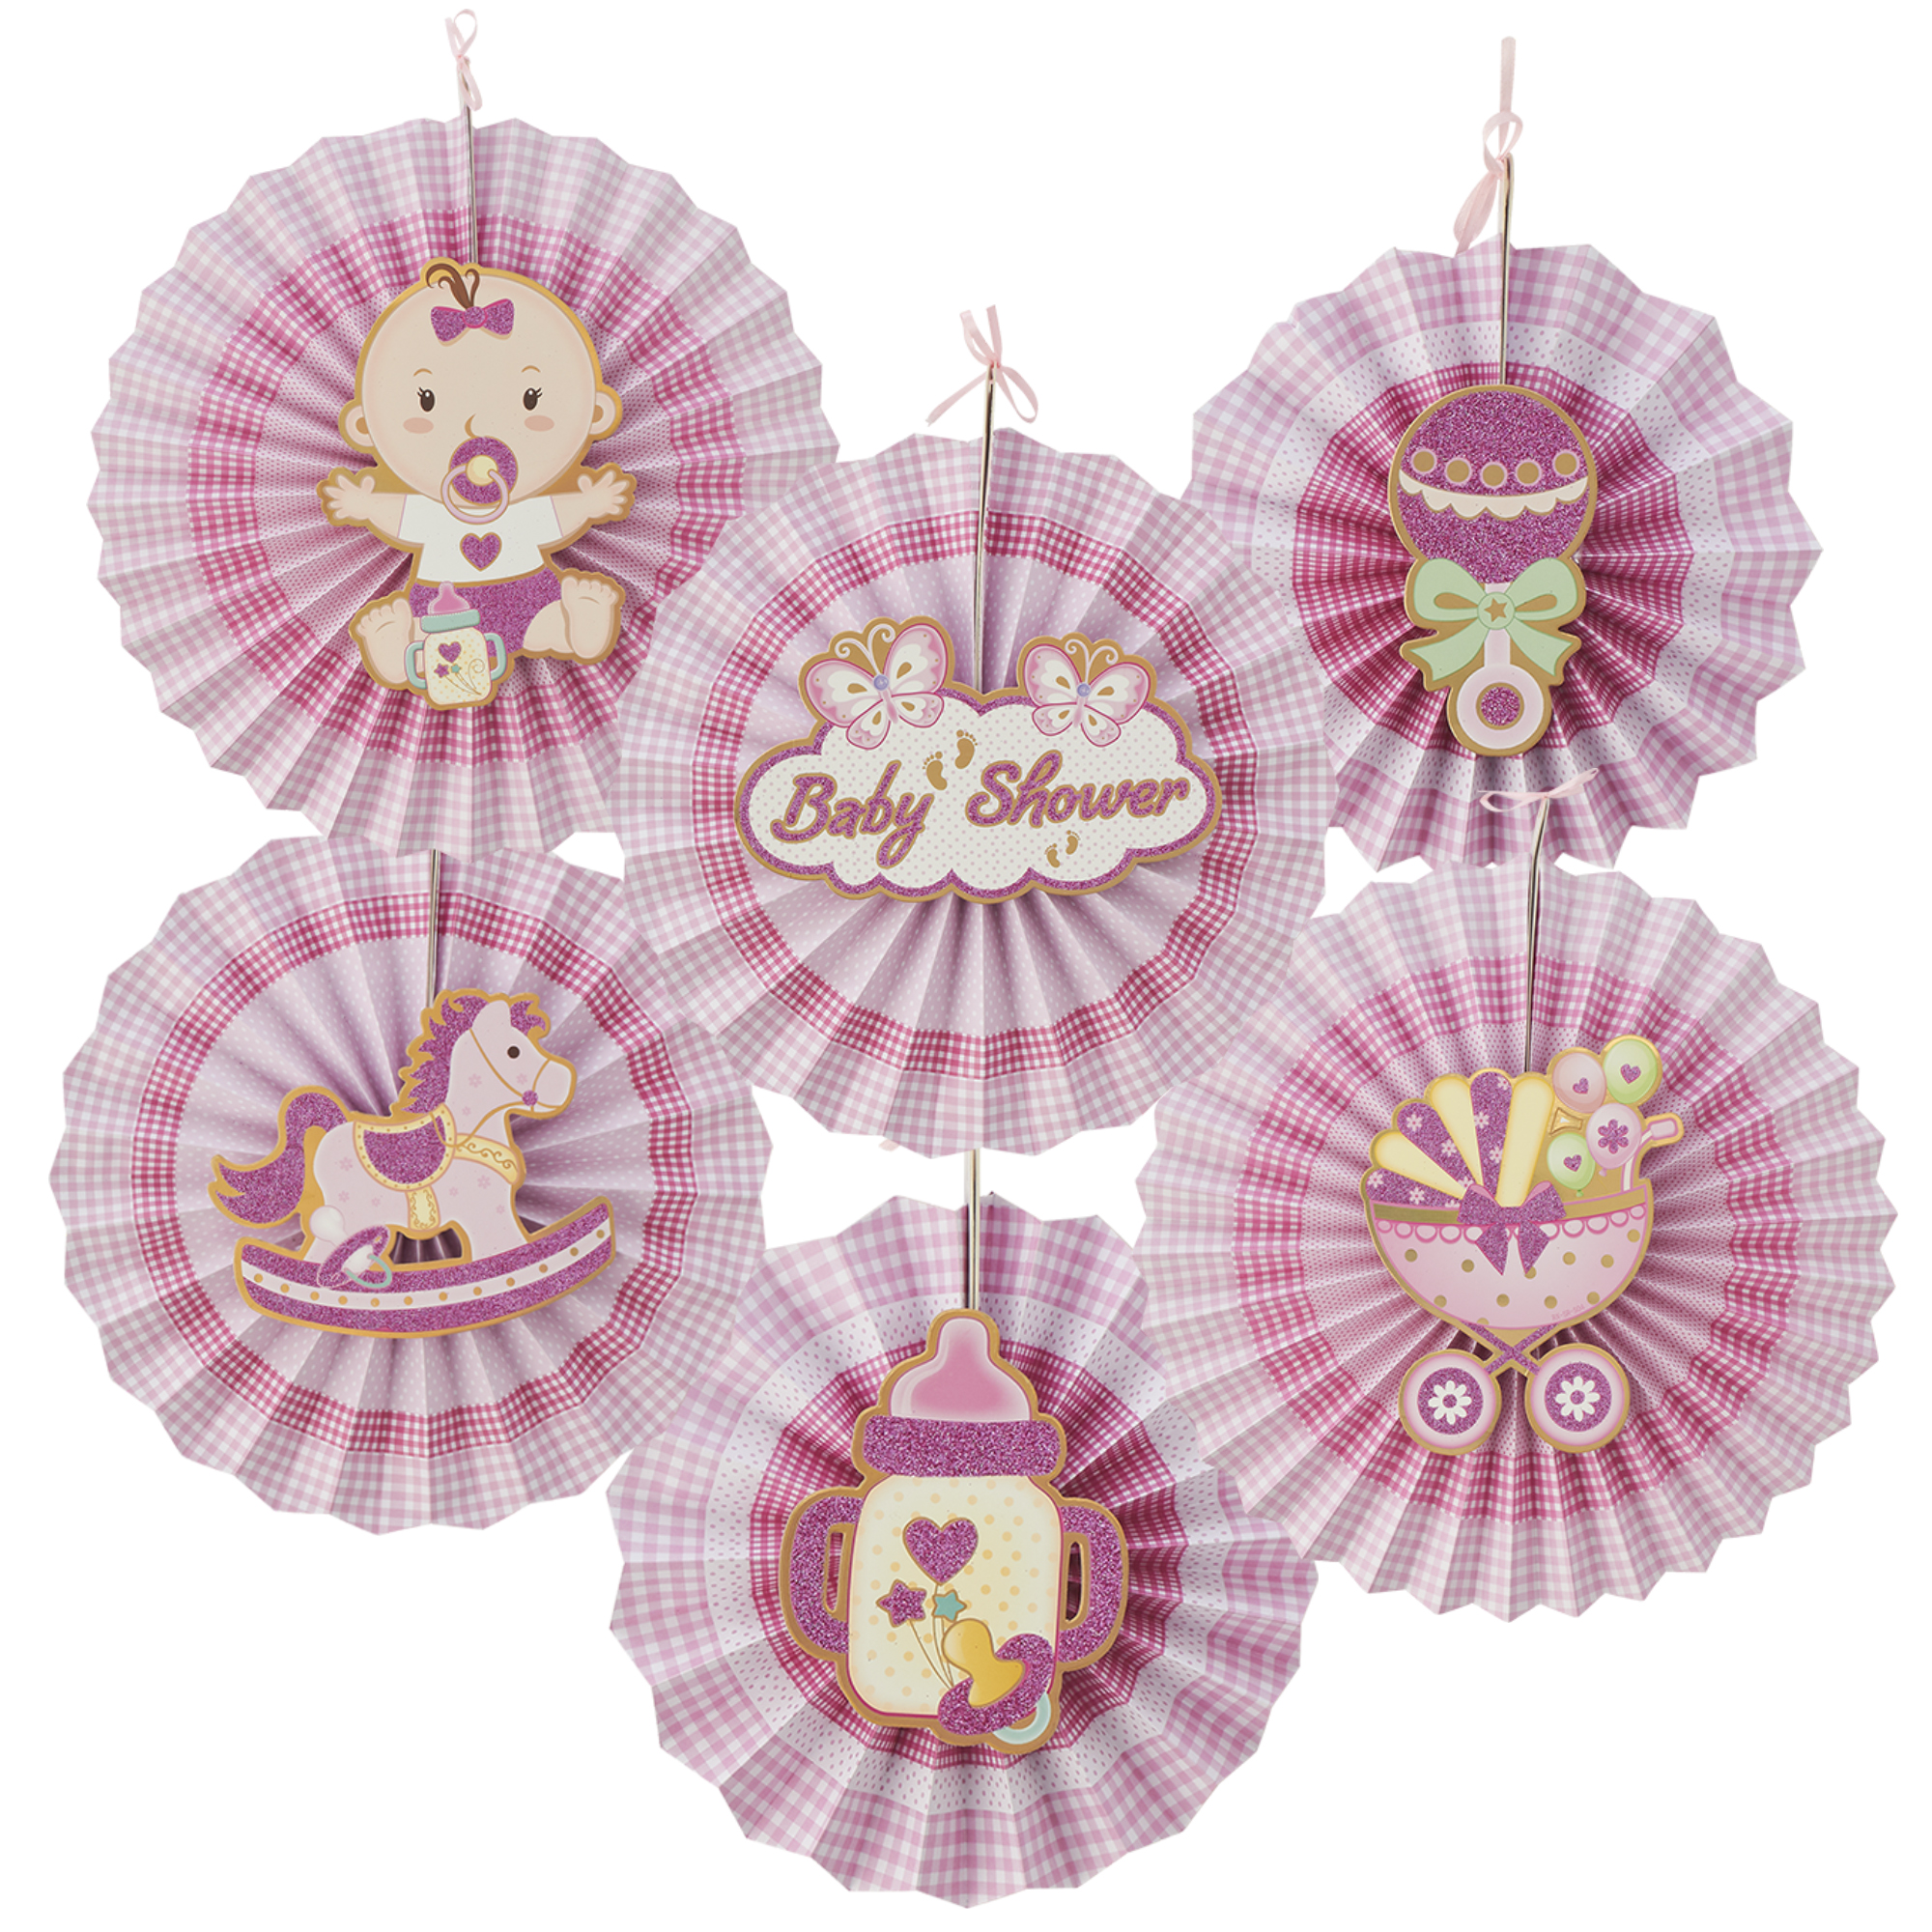 Hanging Paper Fan "Baby Shower" 6pc Set - Pink